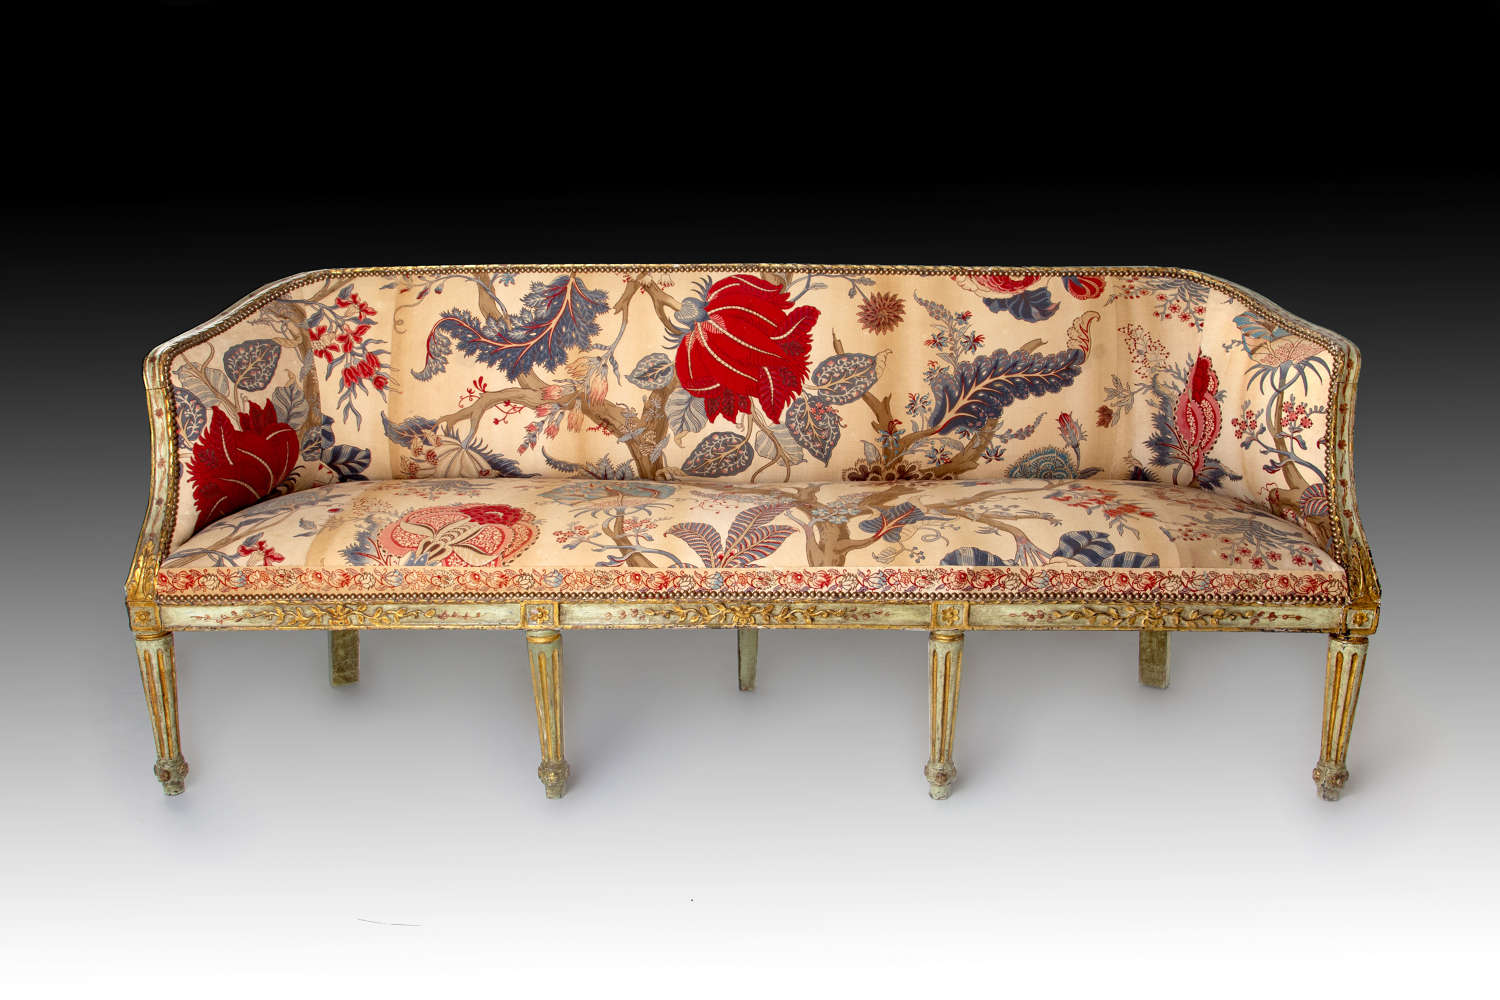 A beautiful 18th century Venetian settee